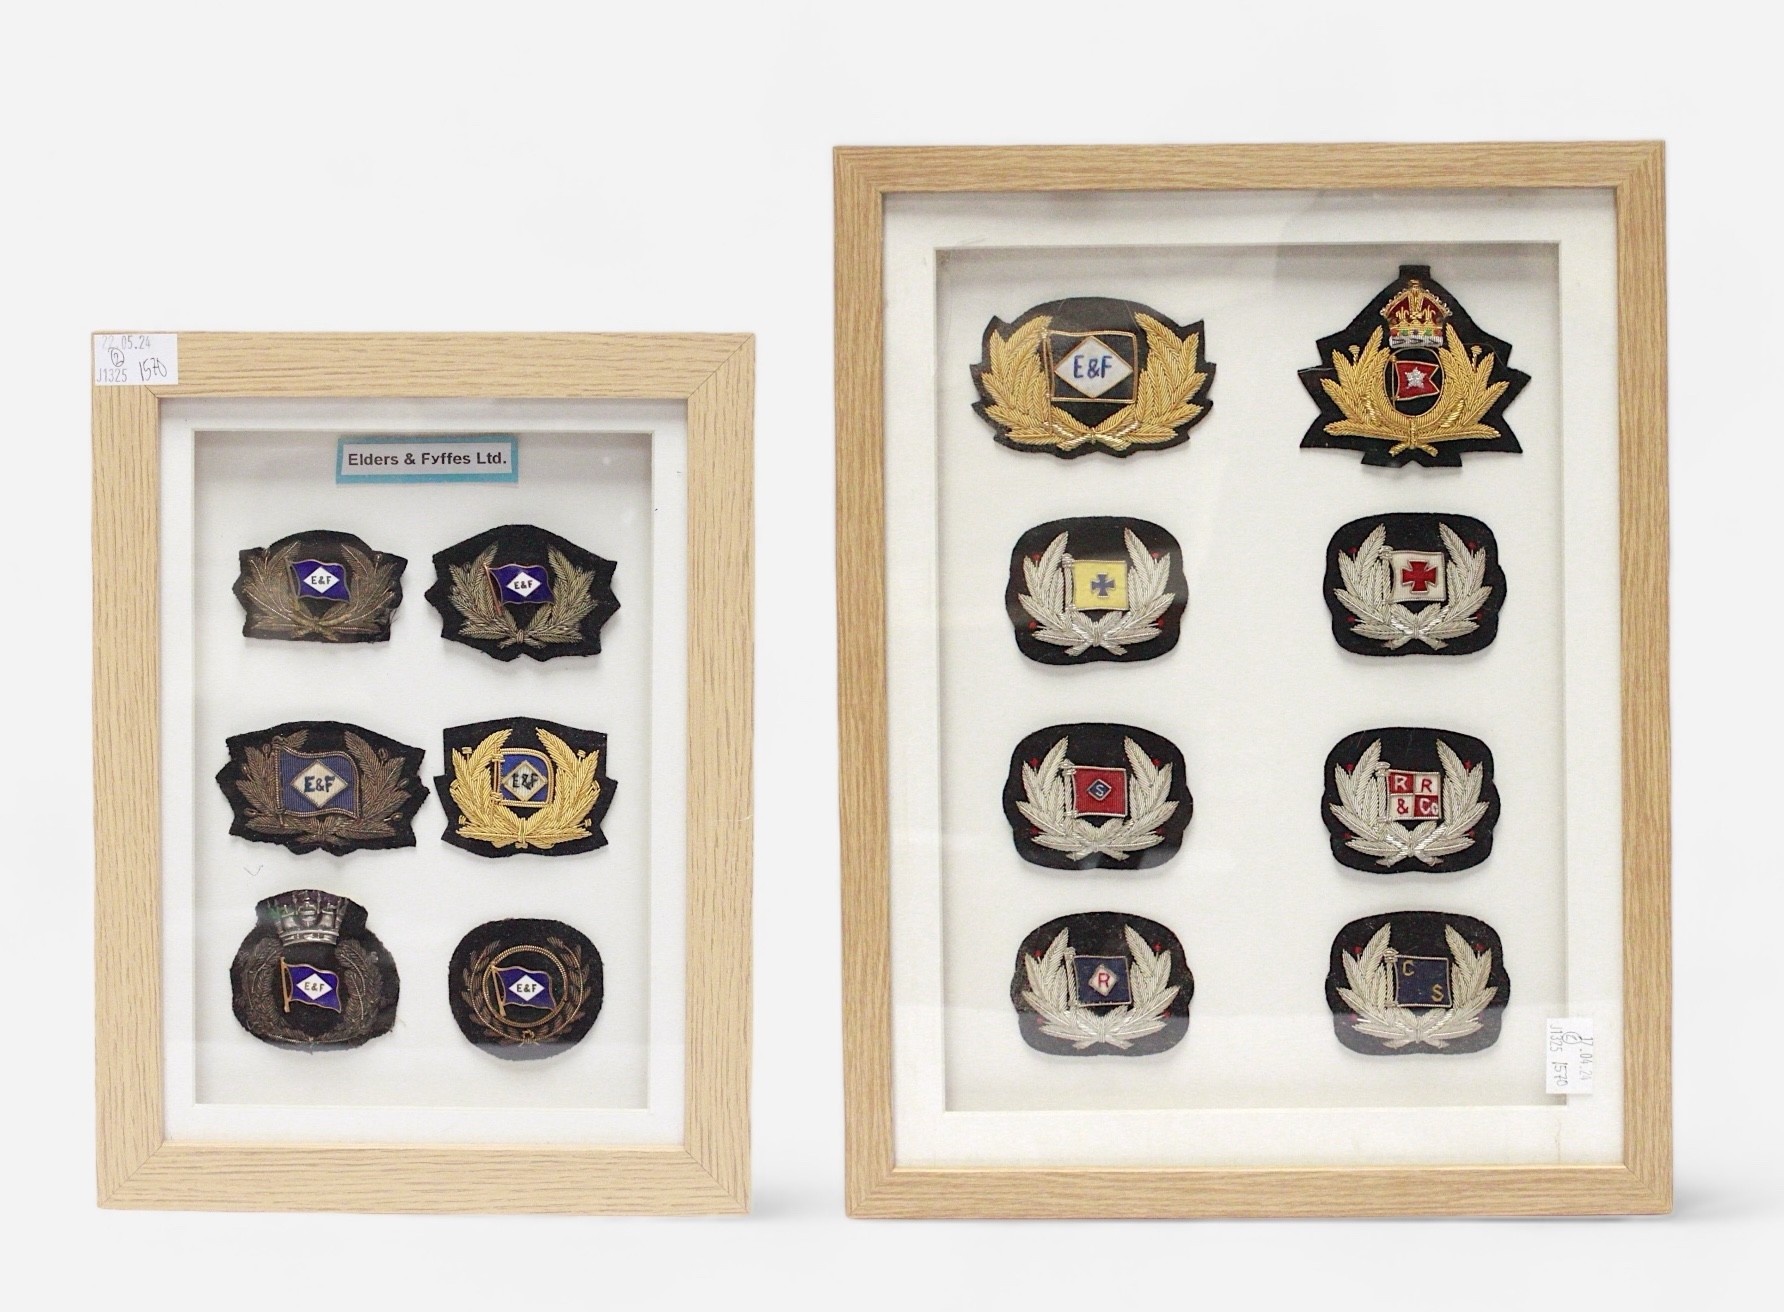 Shipping Line Officers bullion cloth cap badges, comprising Elders & Fyffes, including four enamel